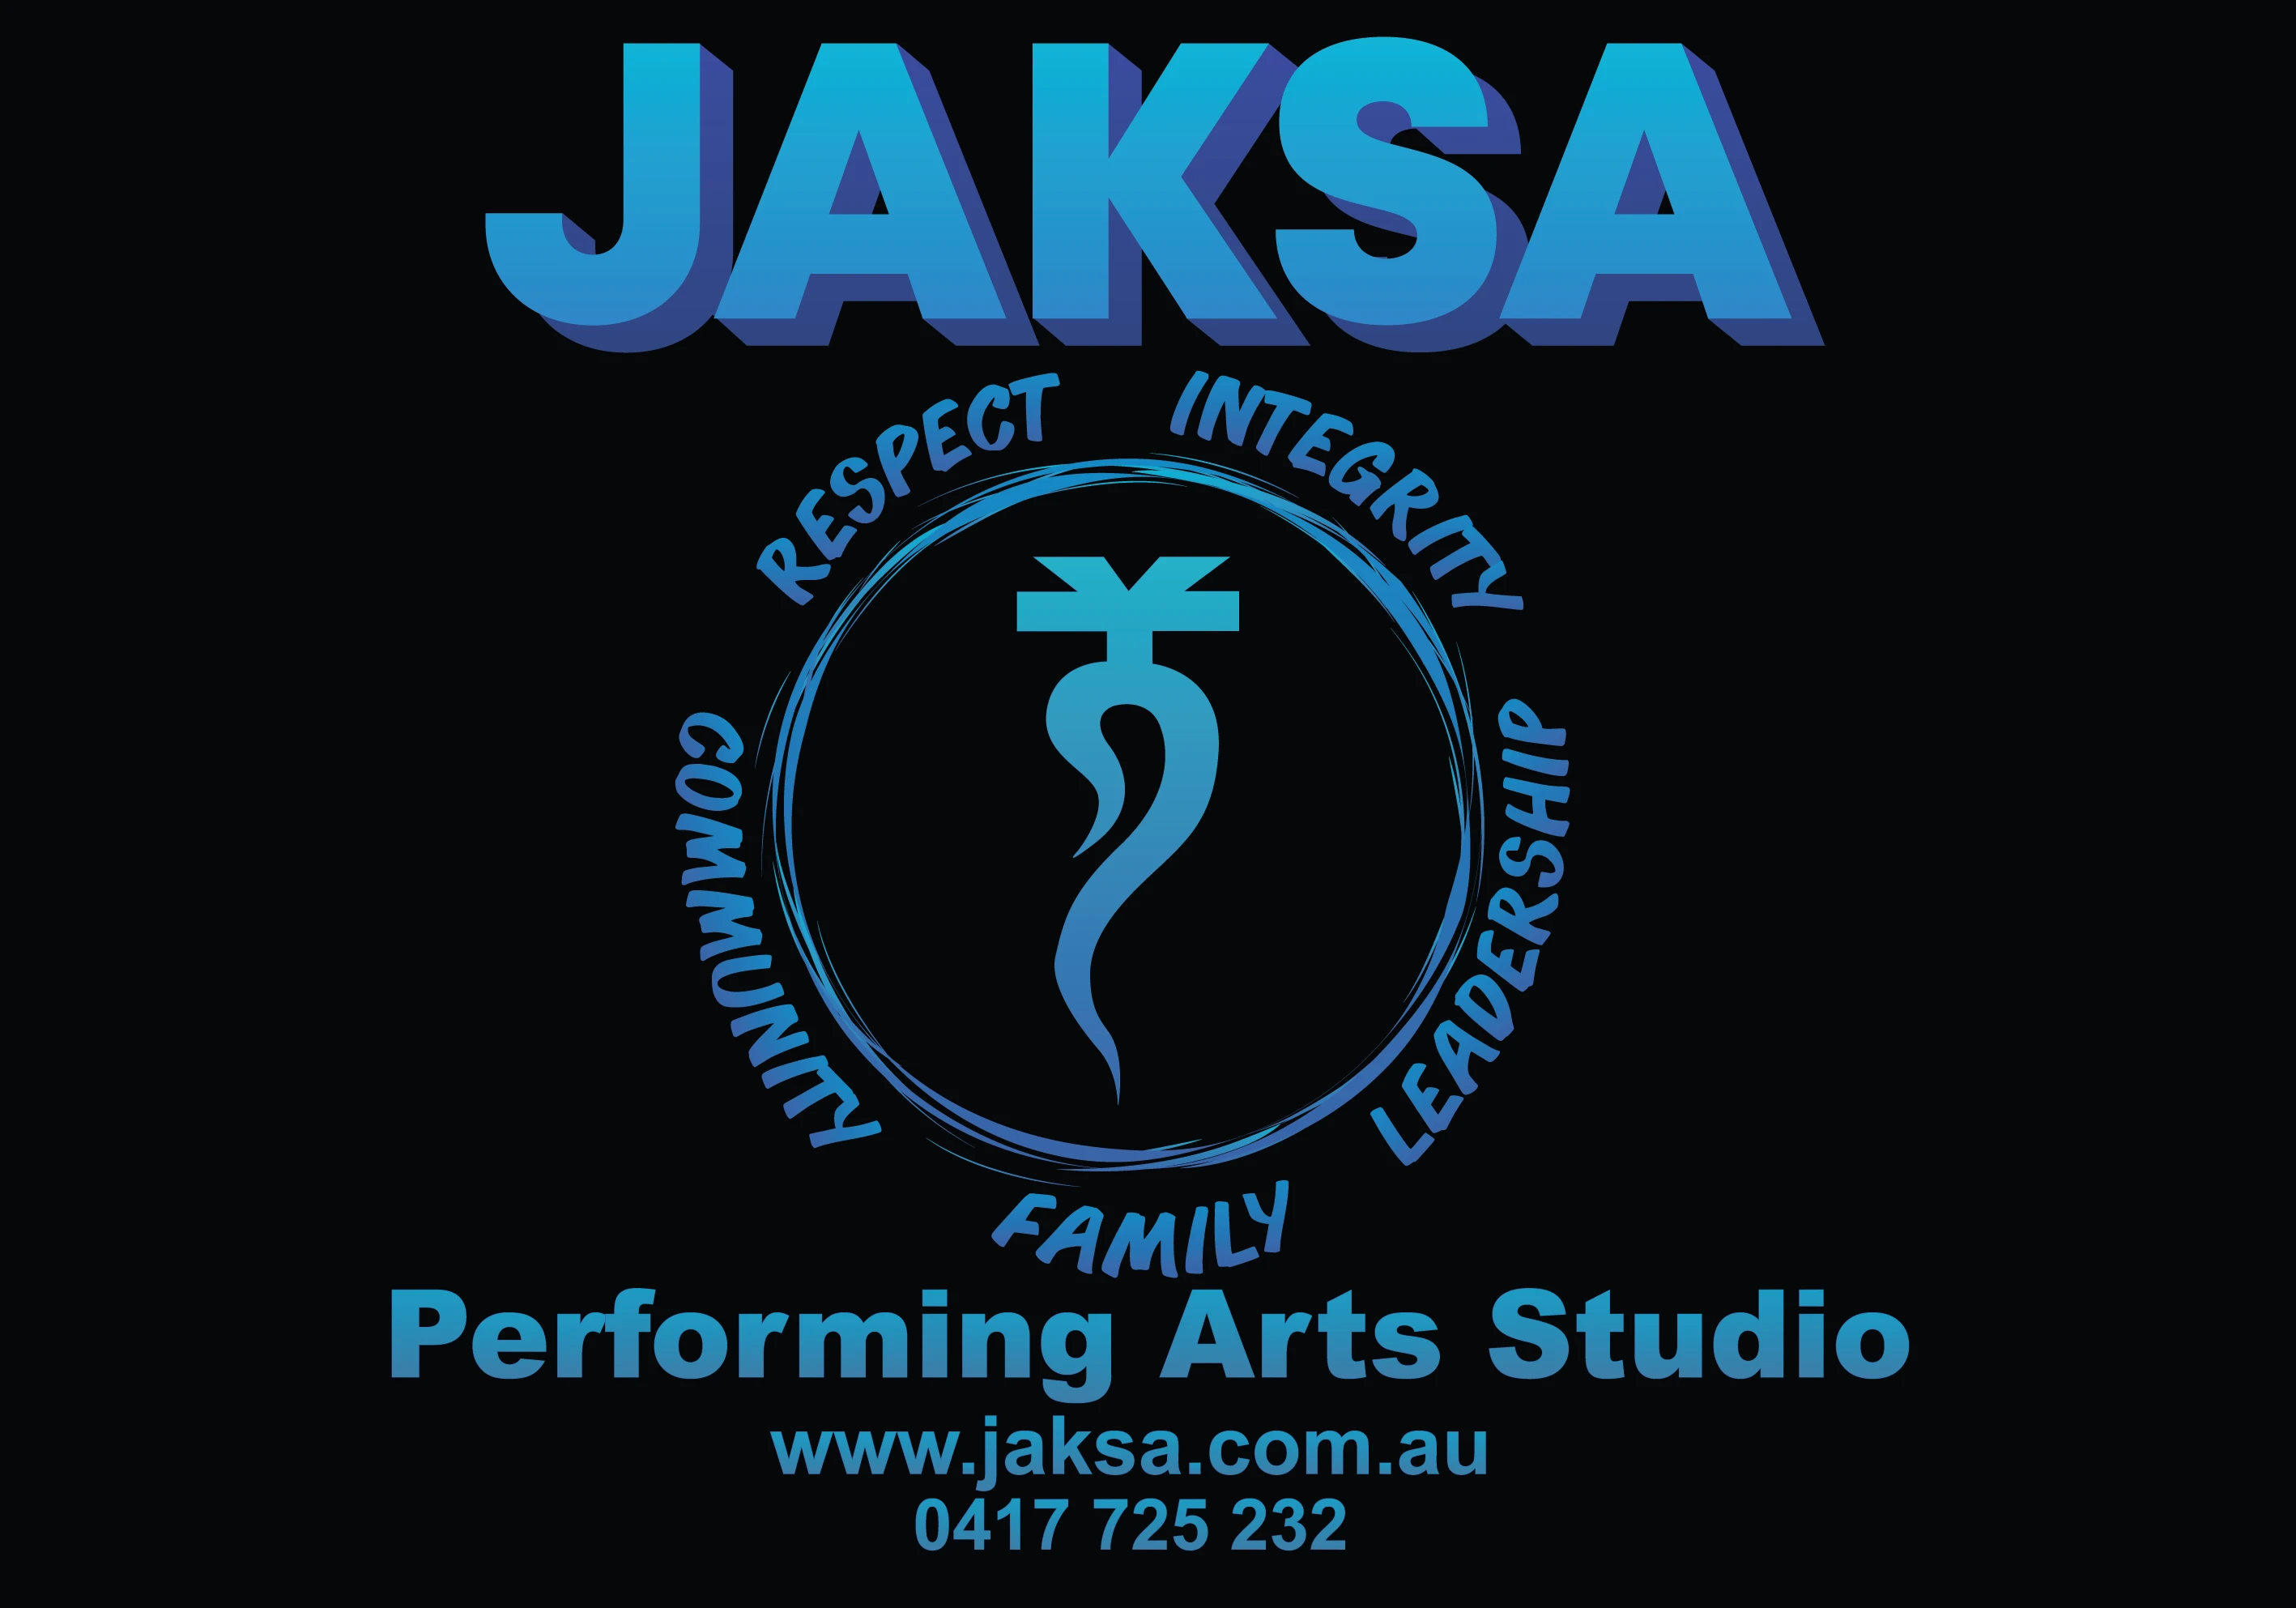 JAKSA Performing Arts Studio